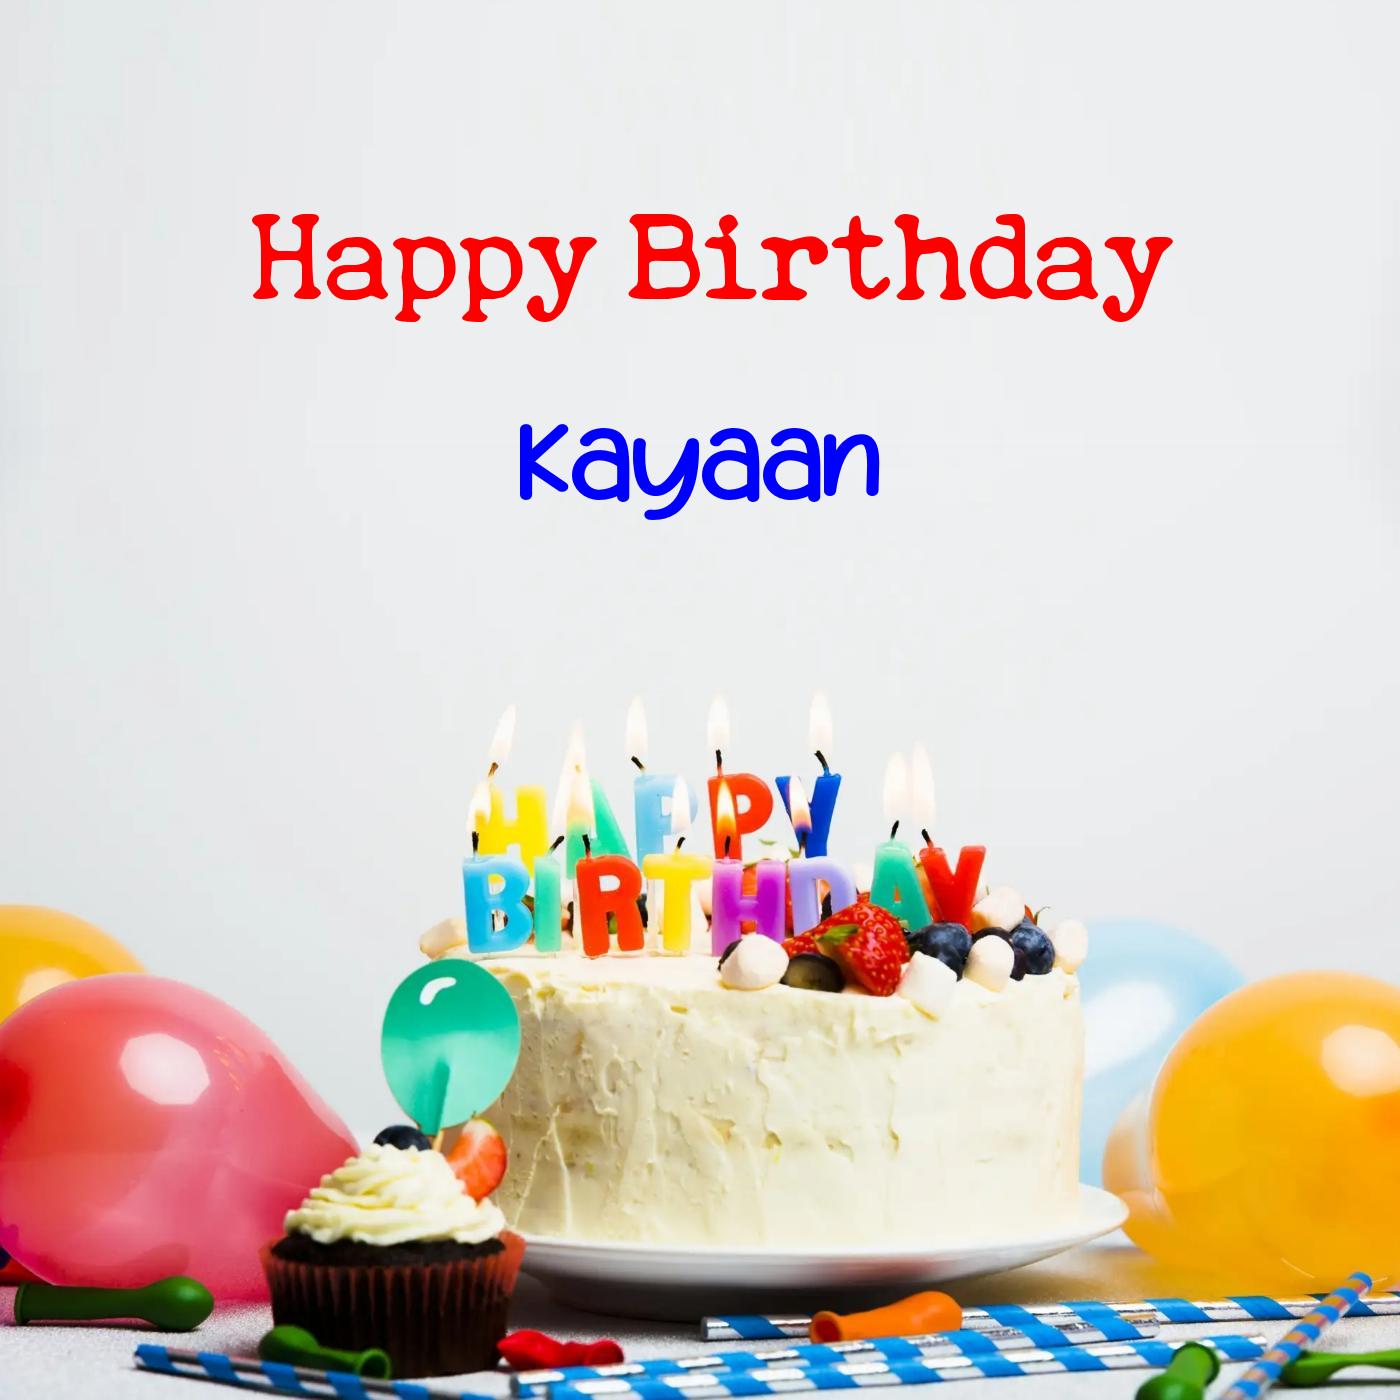 Happy Birthday Kayaan Cake Balloons Card